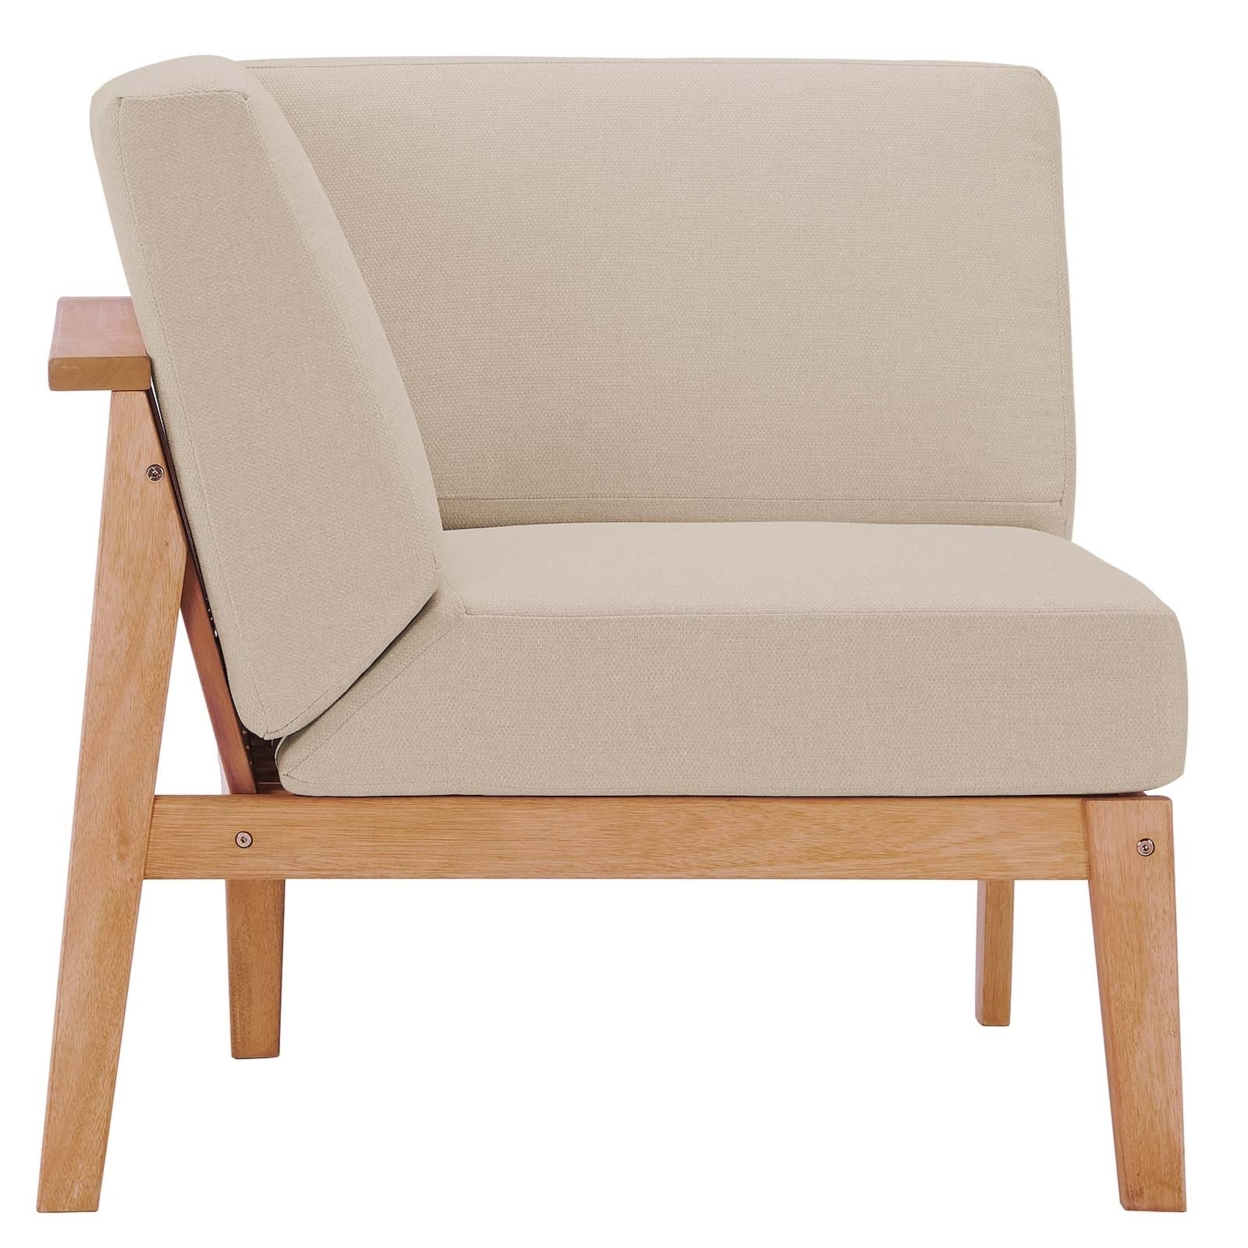 33 Inch Outdoor Patio Eucalyptus Wood Corner Chair, Natural Brown